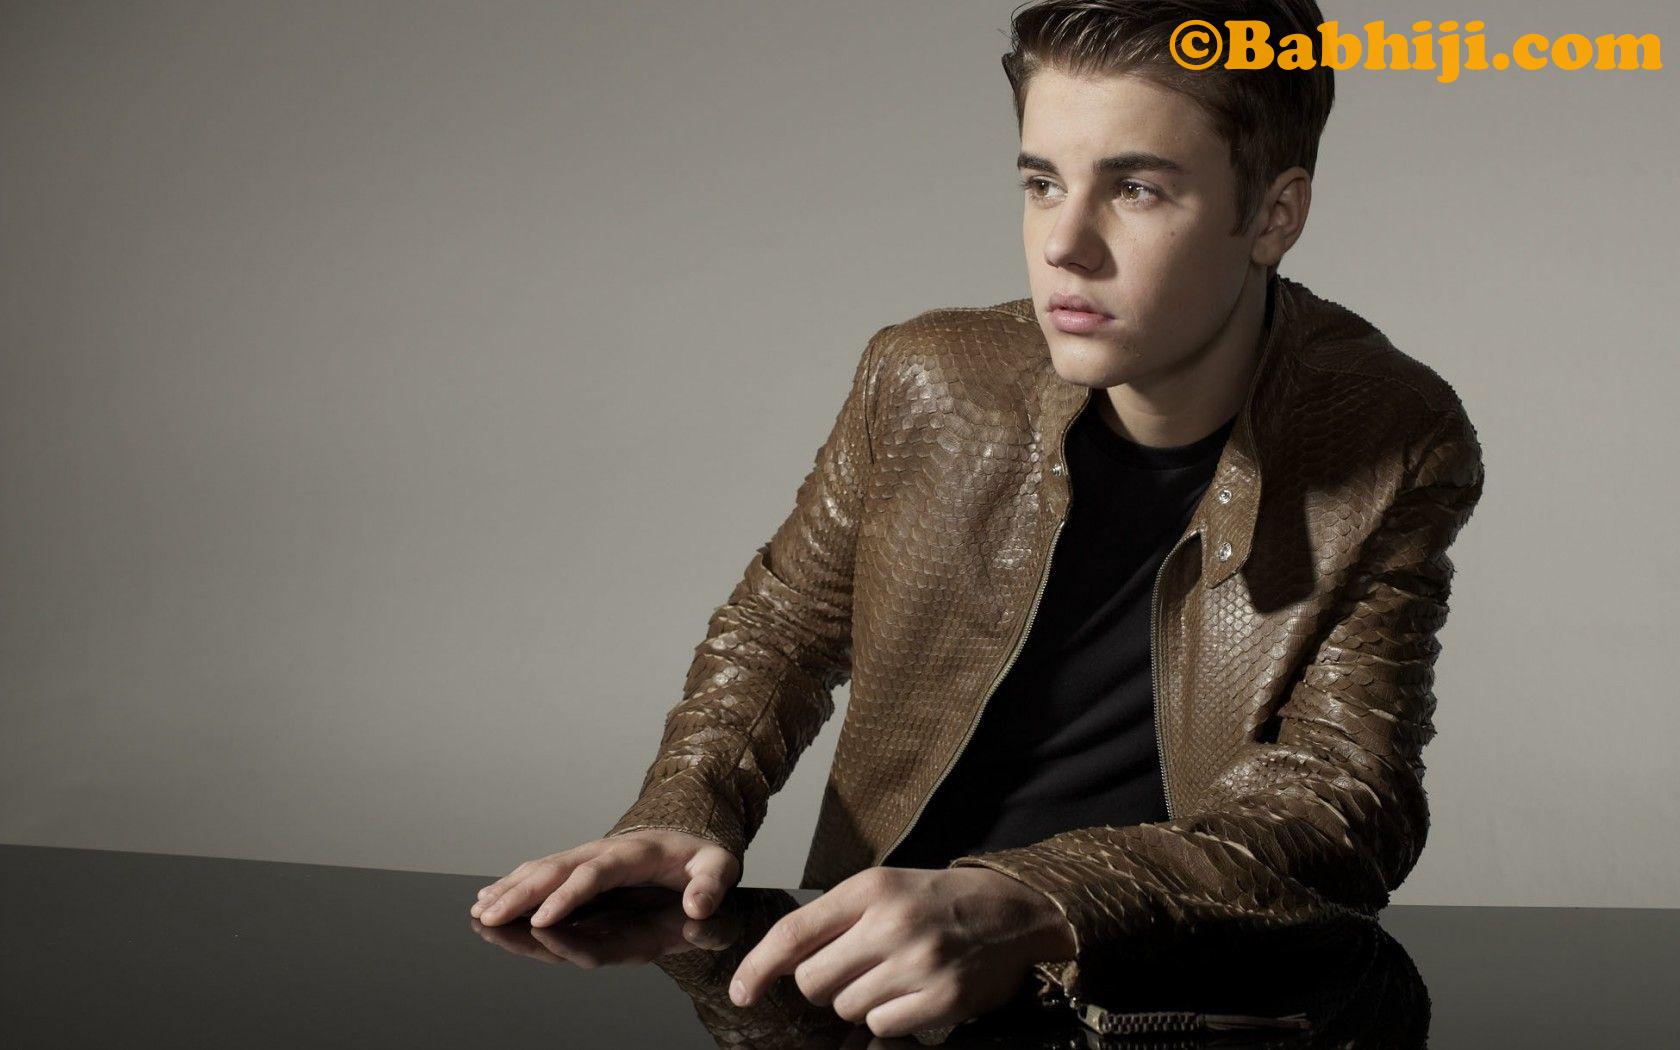 Justin Bieber Photo. Justin Bieber Wallpaper. Justin Bieber Image